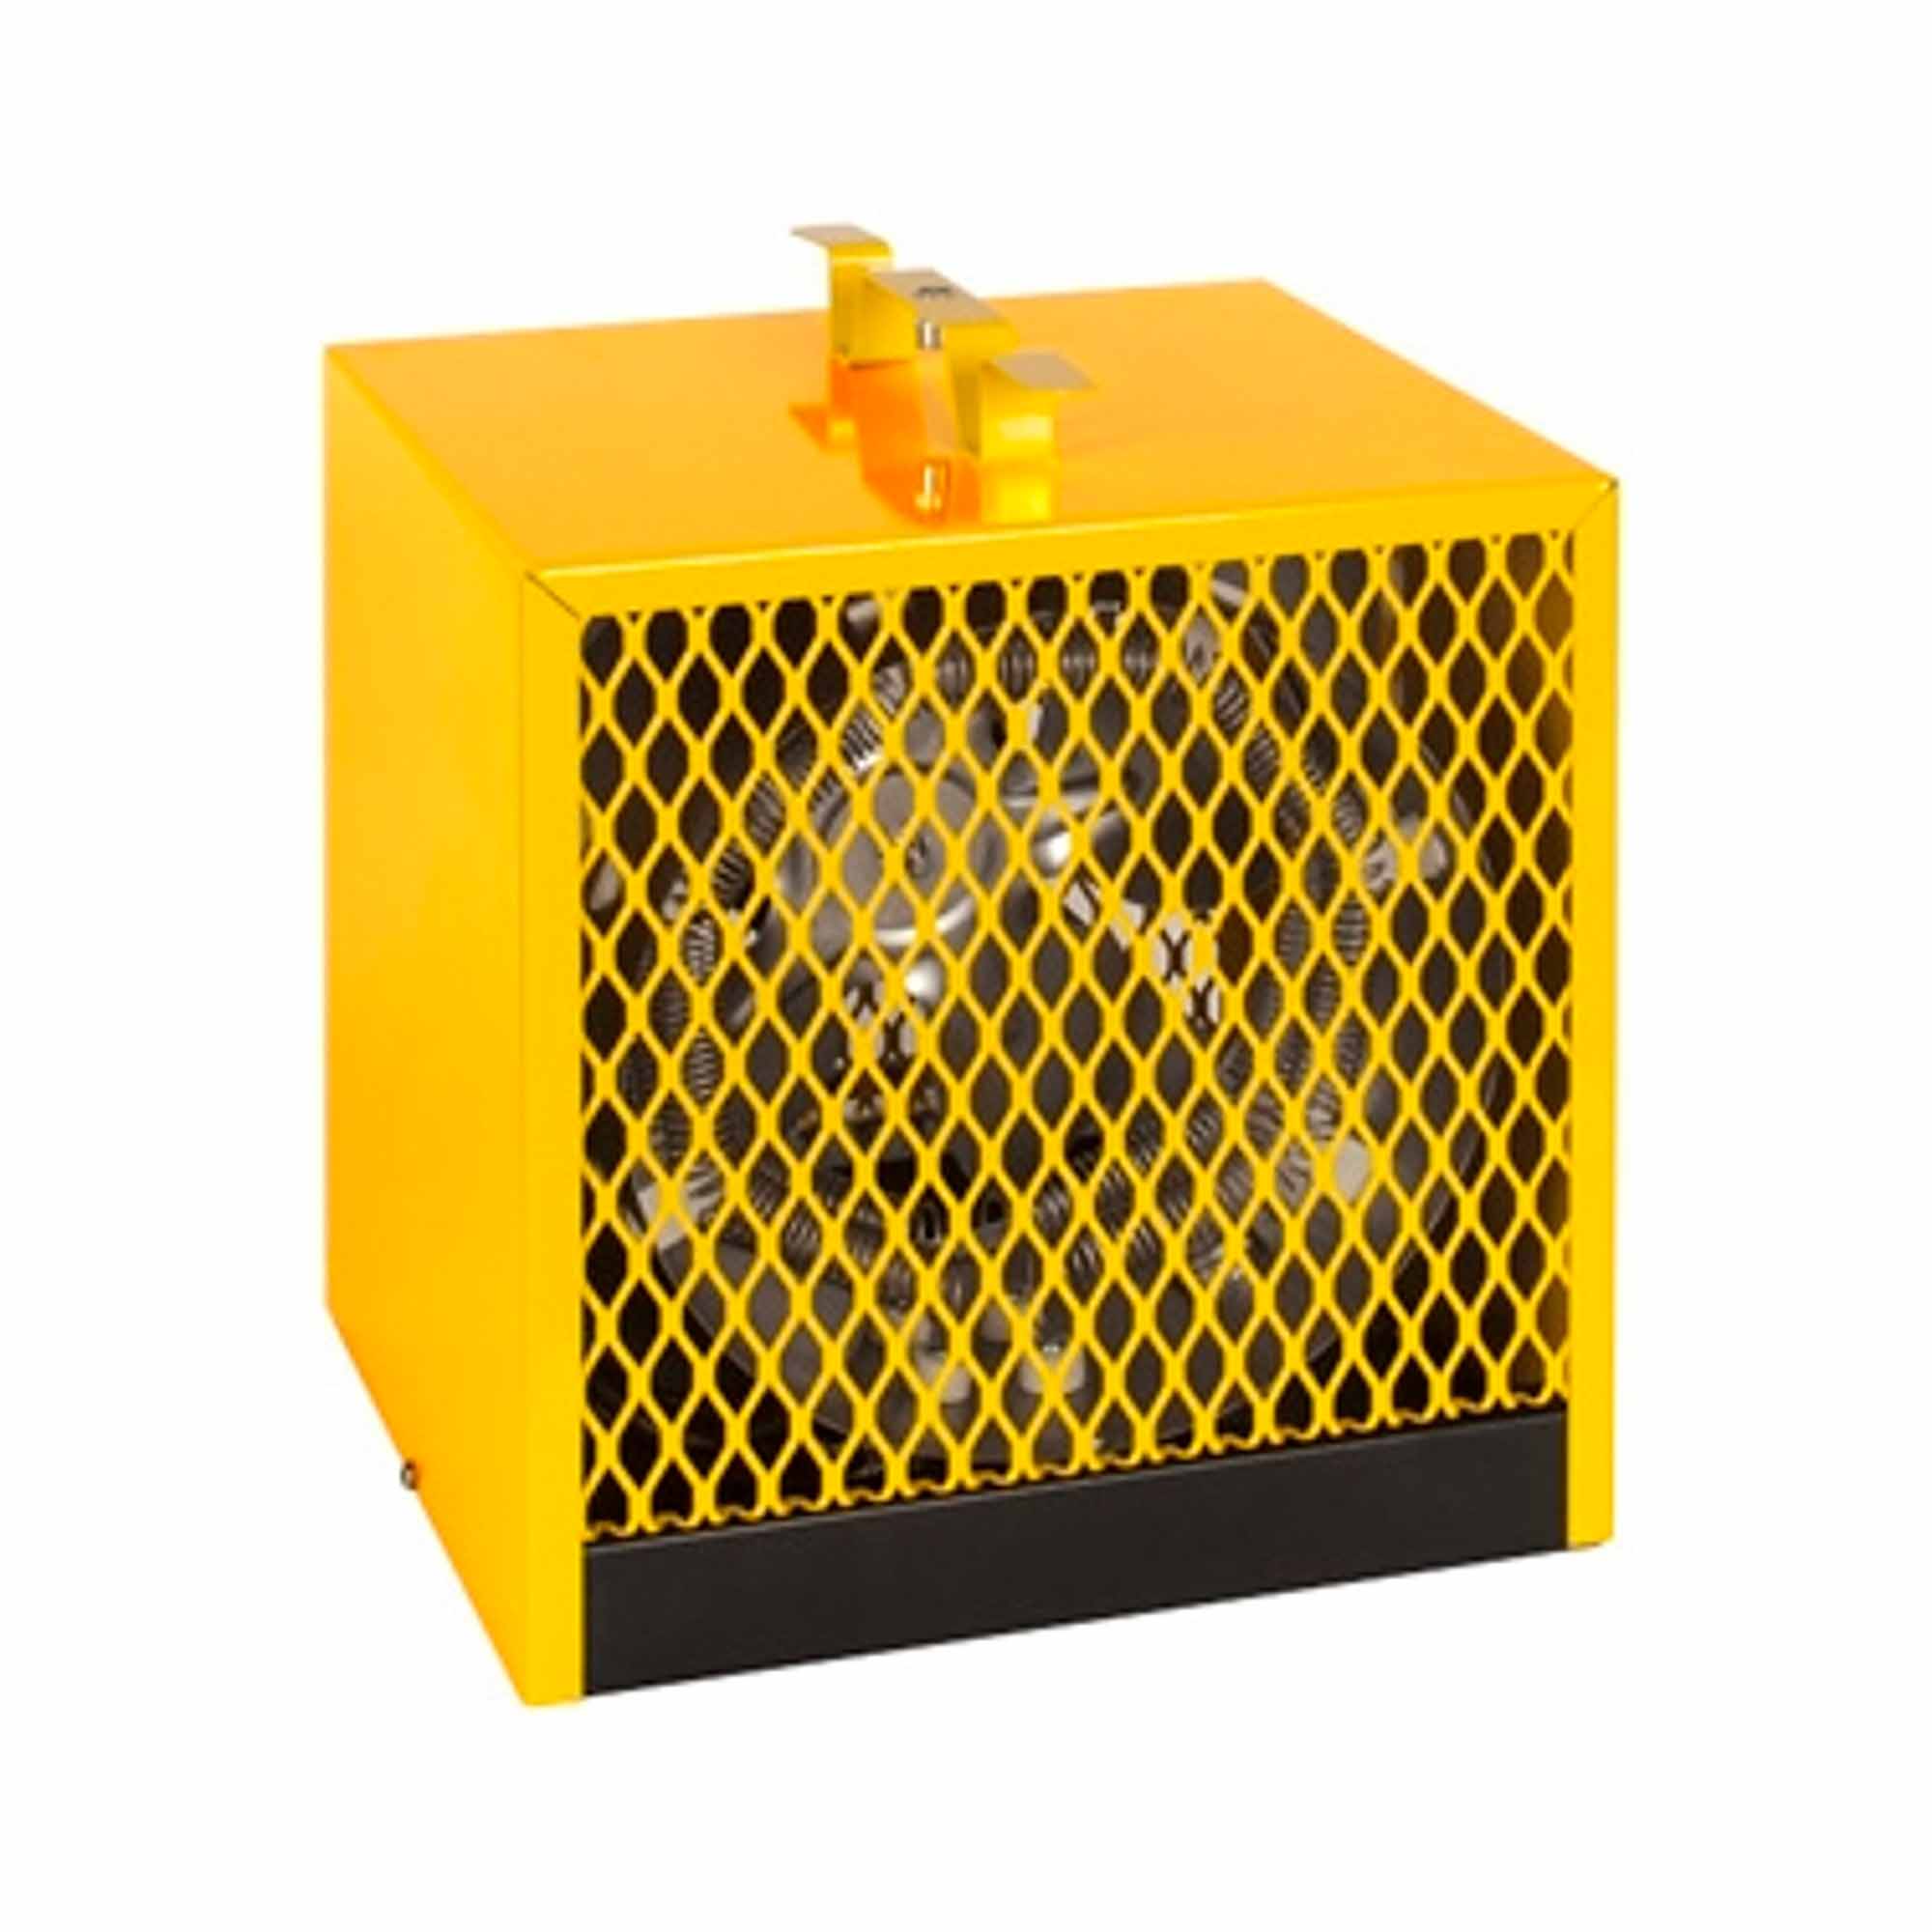 Stelpro Sch 20/17.3 A Portable Heater, 240/208 V, 4800W, 12,285 Btu/Hr, Yellow